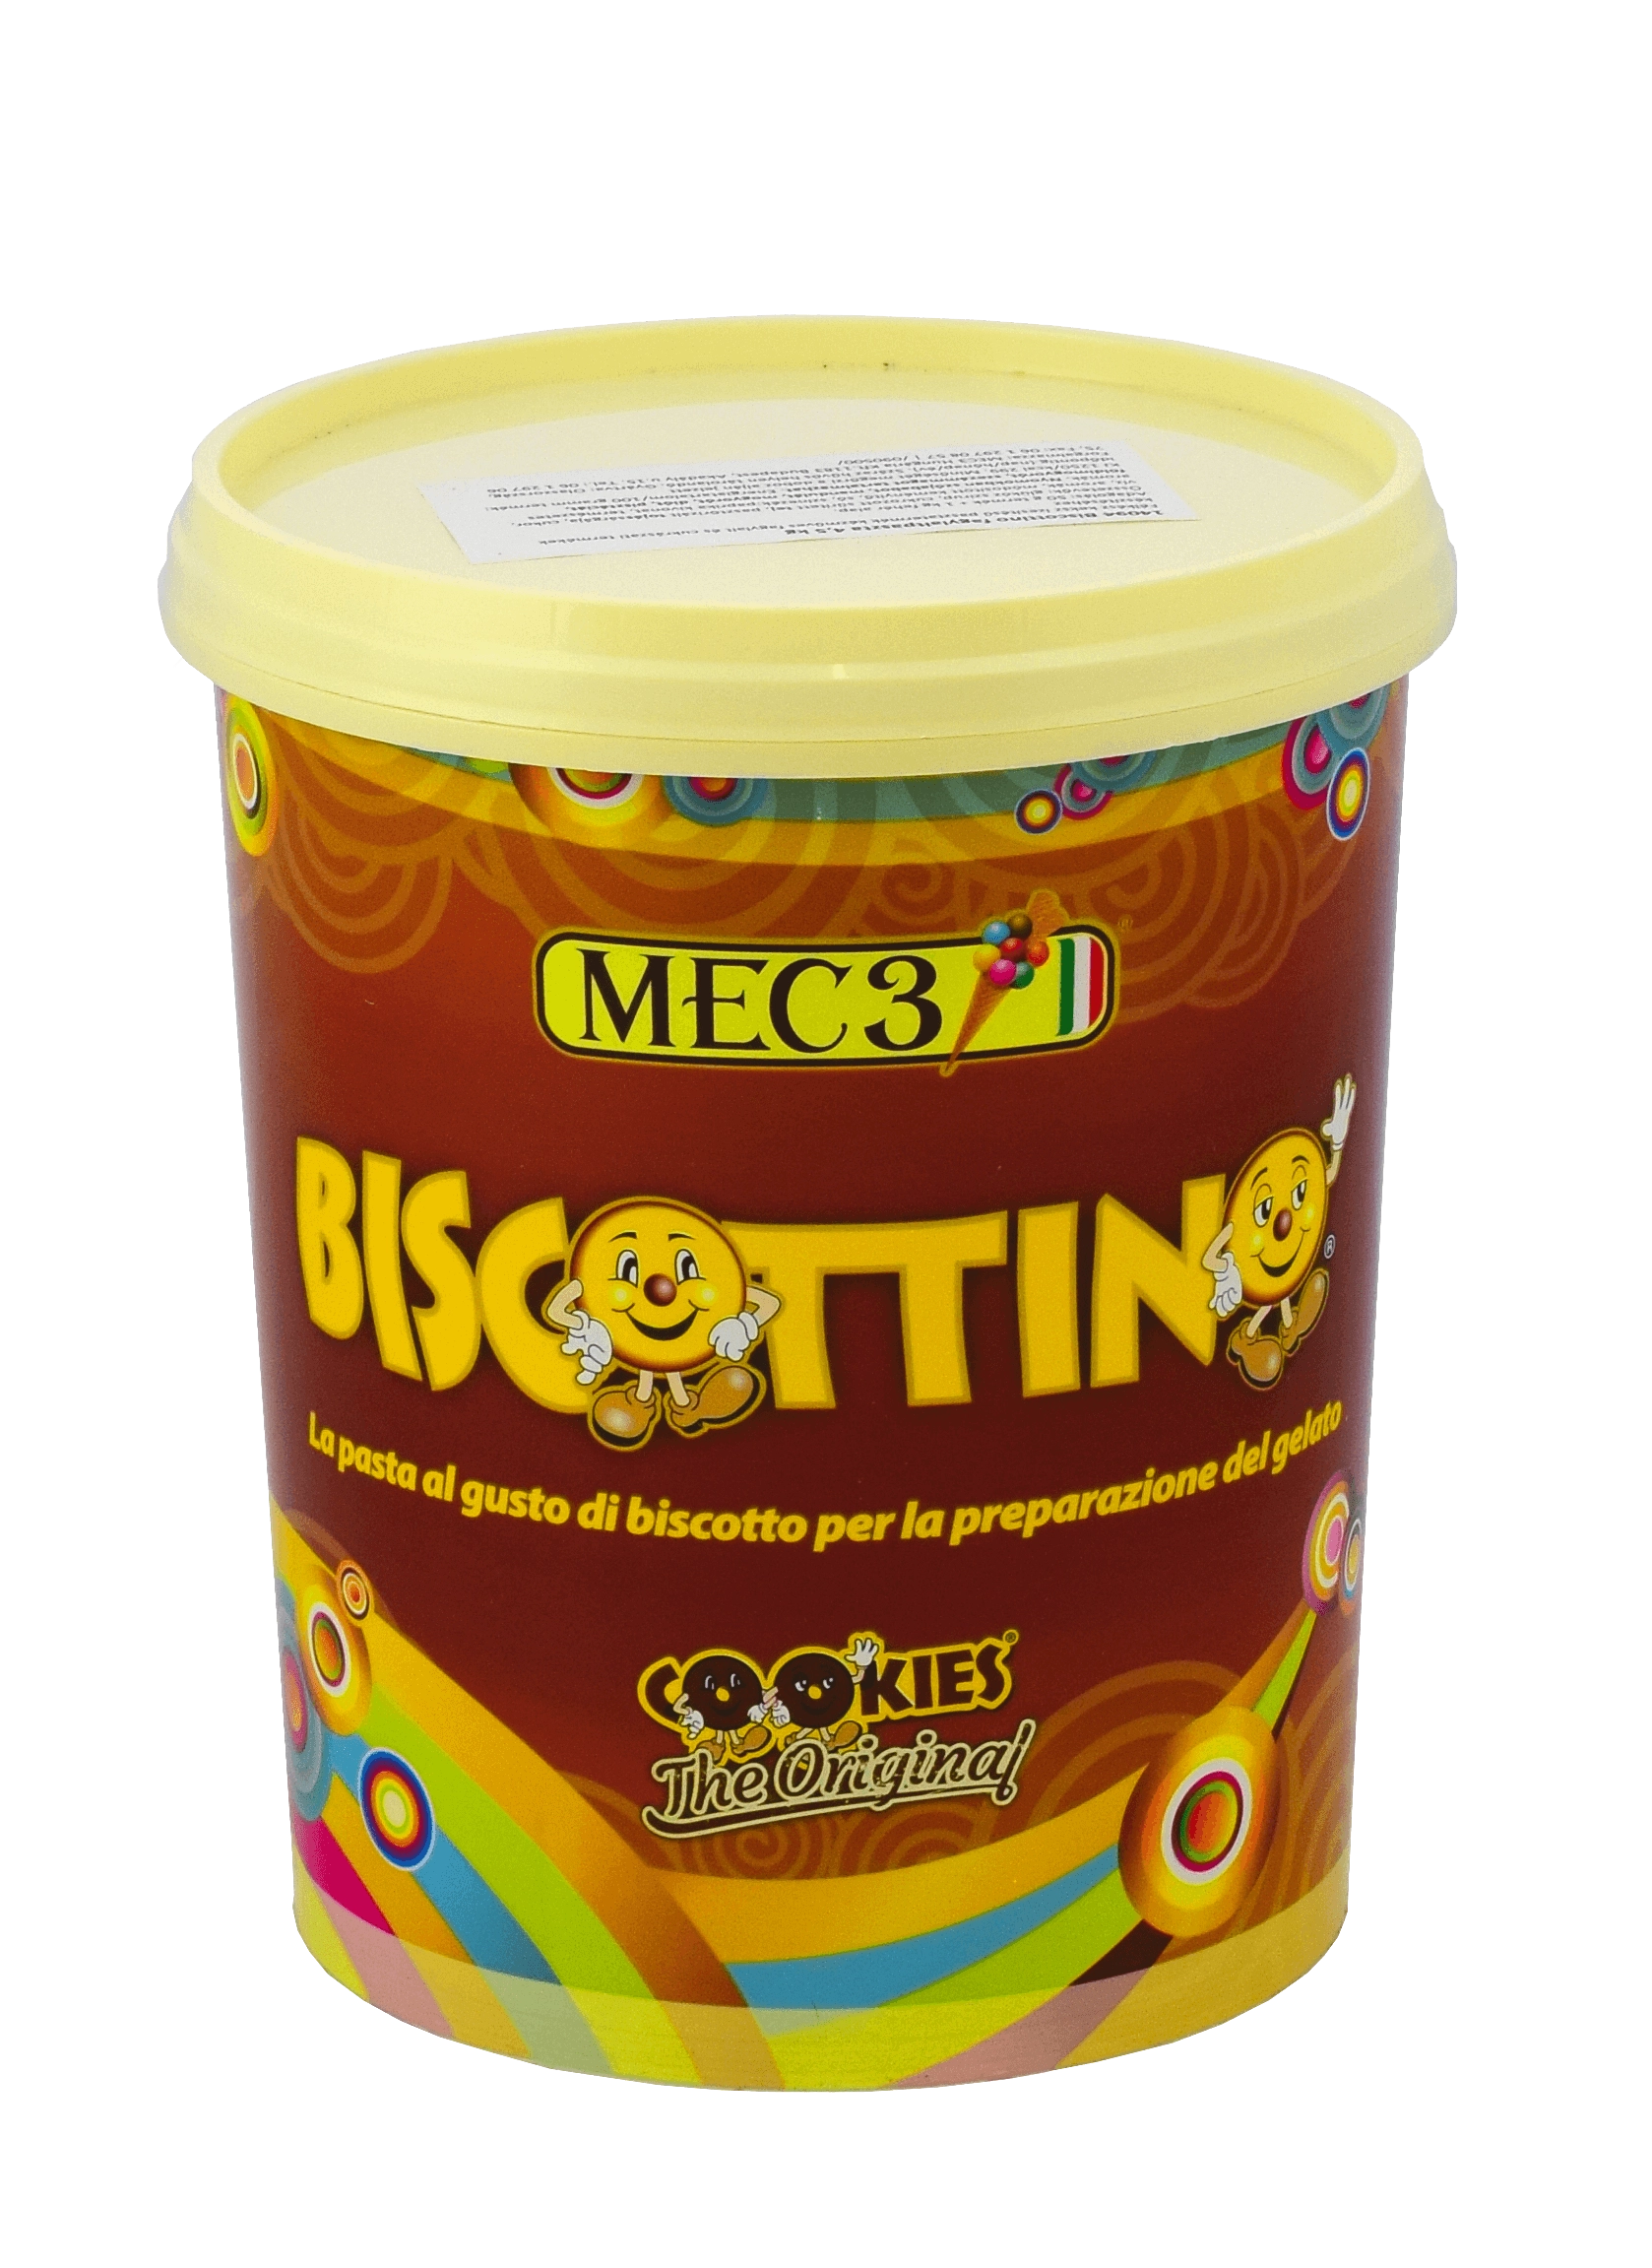 Mec3 Biscottino fagylaltpaszta 4,5 kg